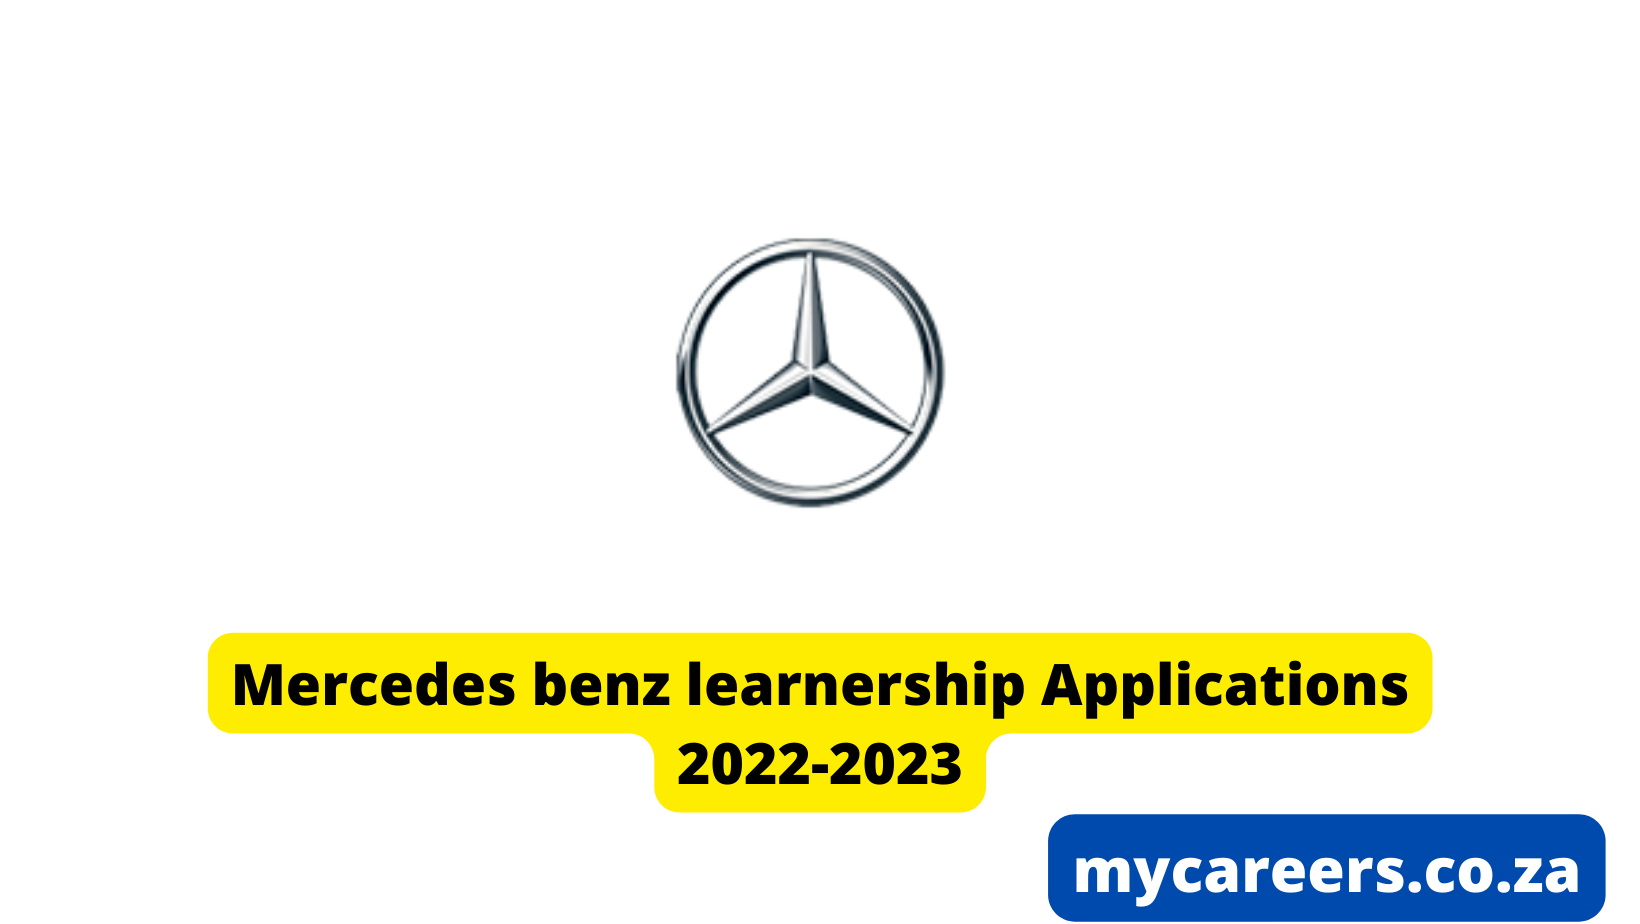 Mercedes benz learnership Applications 2022-2023